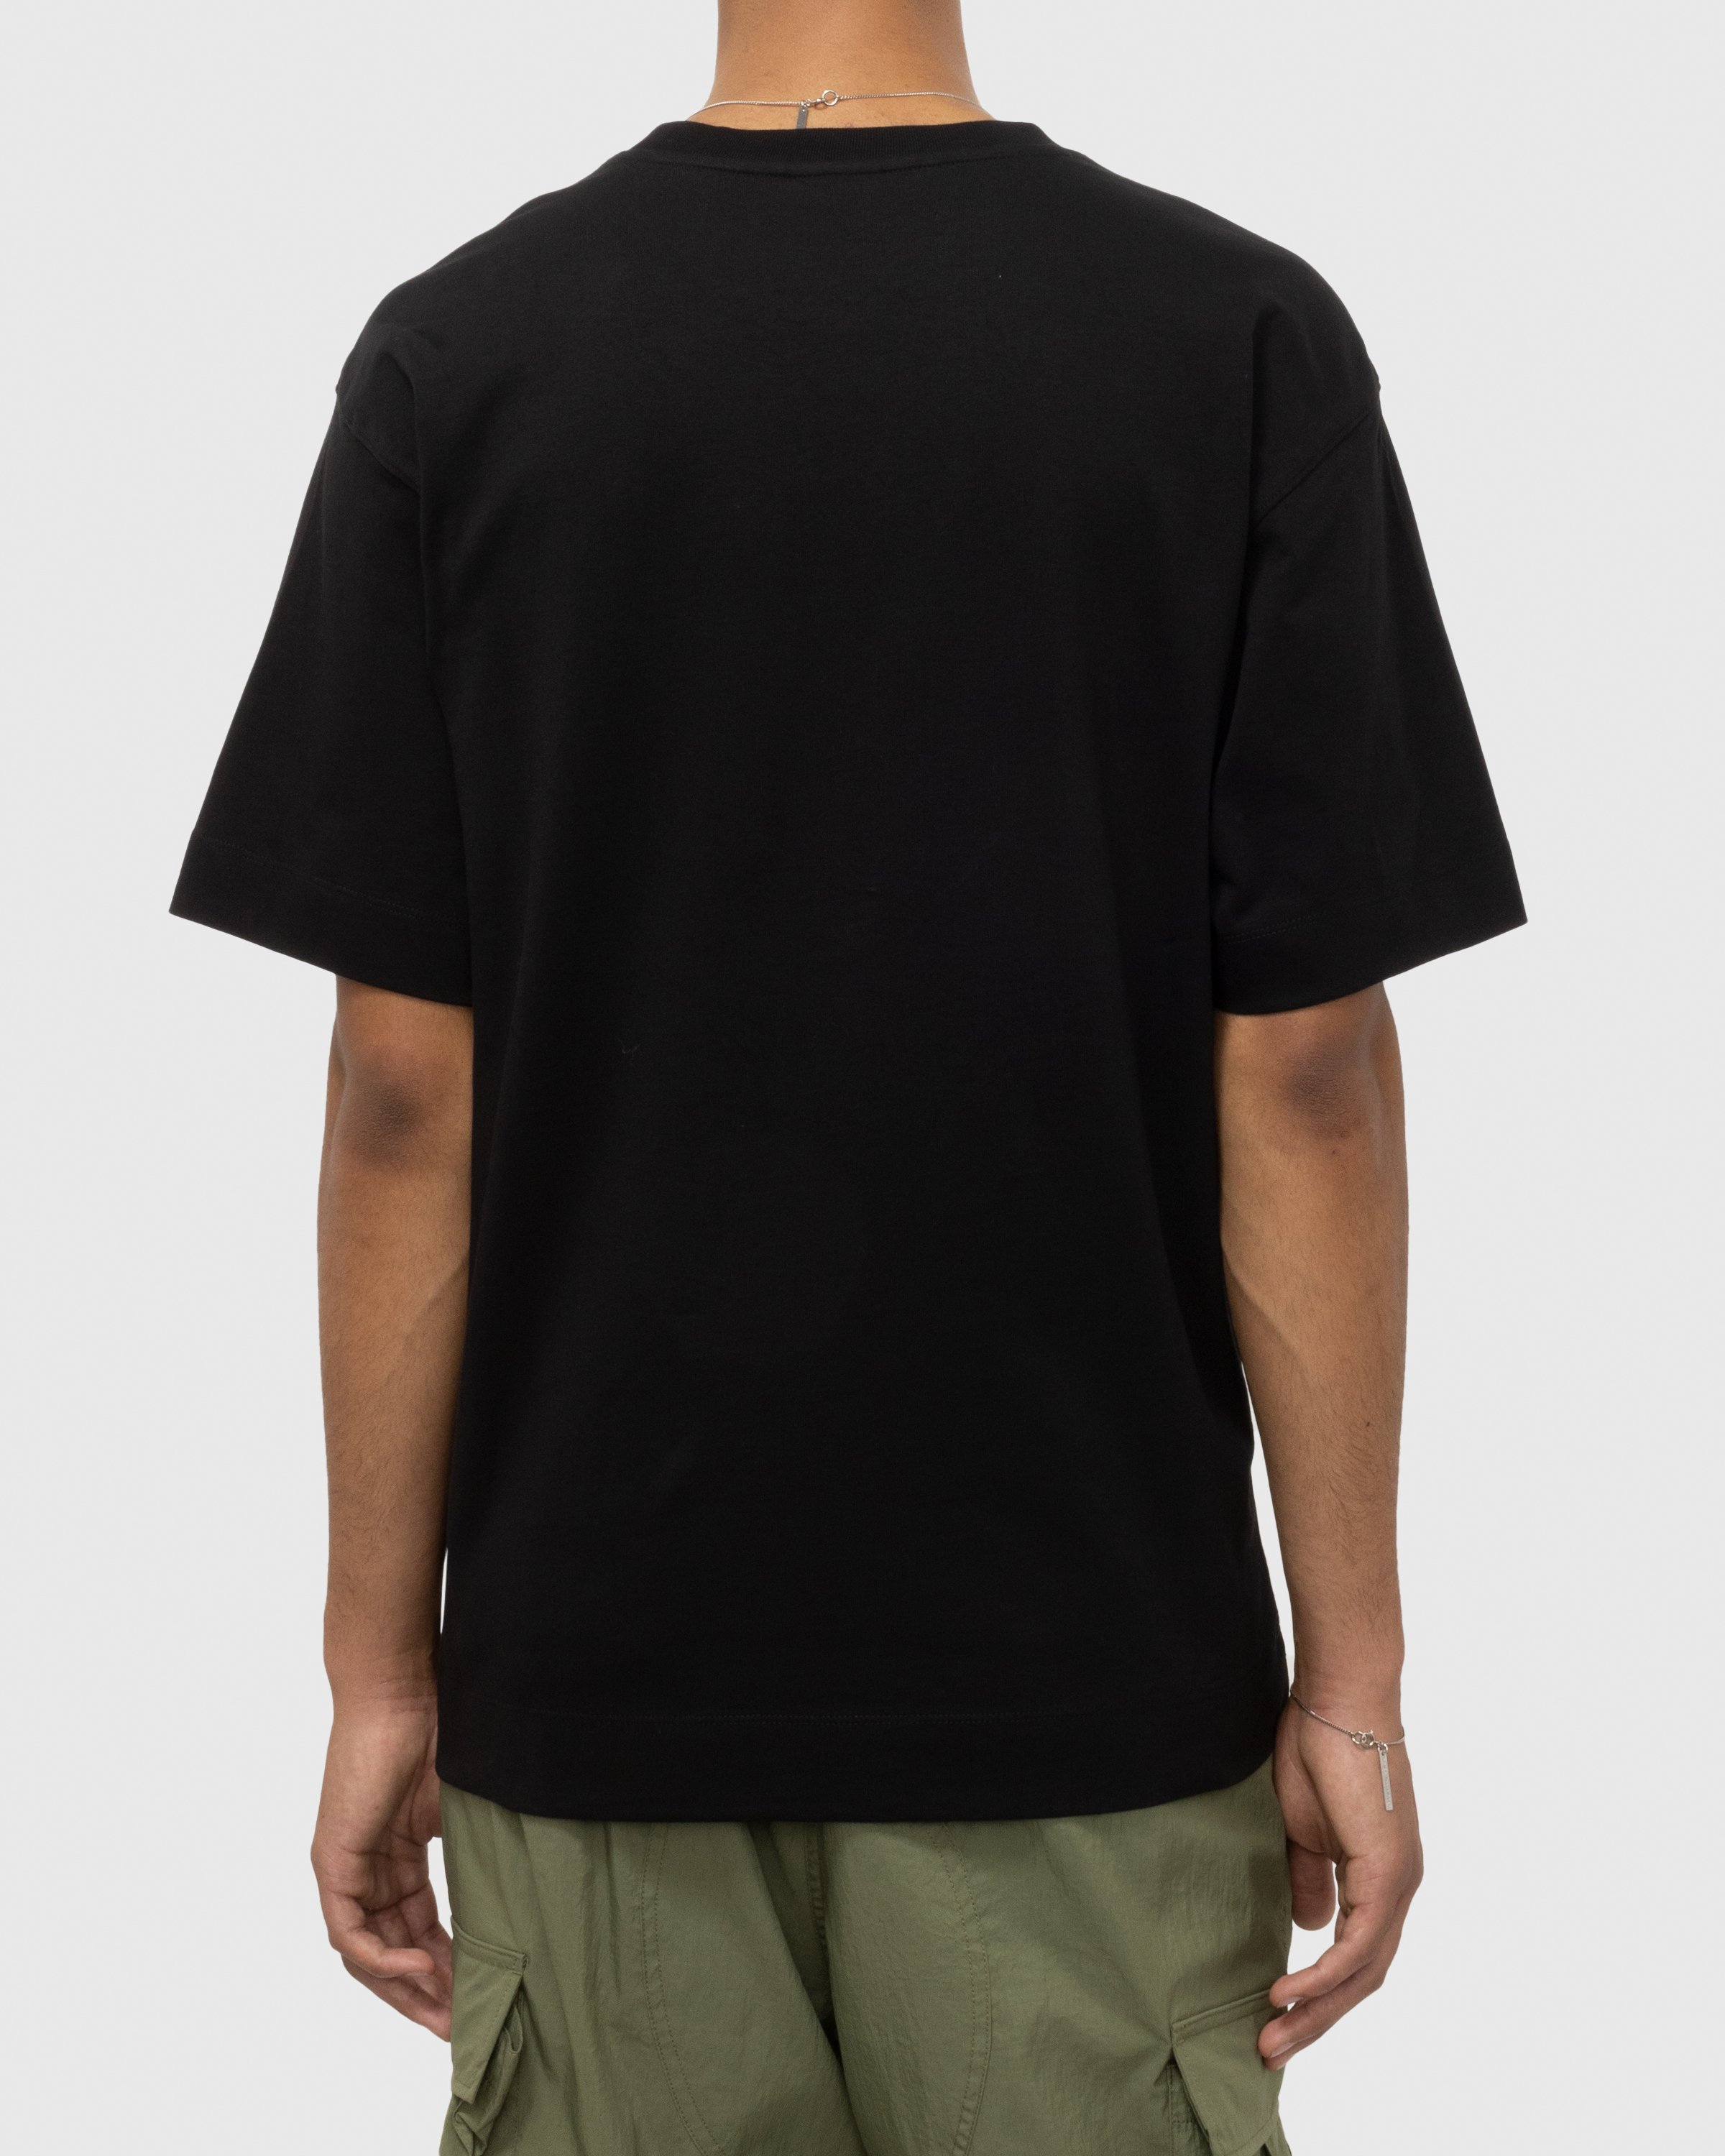 Dries van Noten - Heli T-Shirt Black - Clothing - Black - Image 2